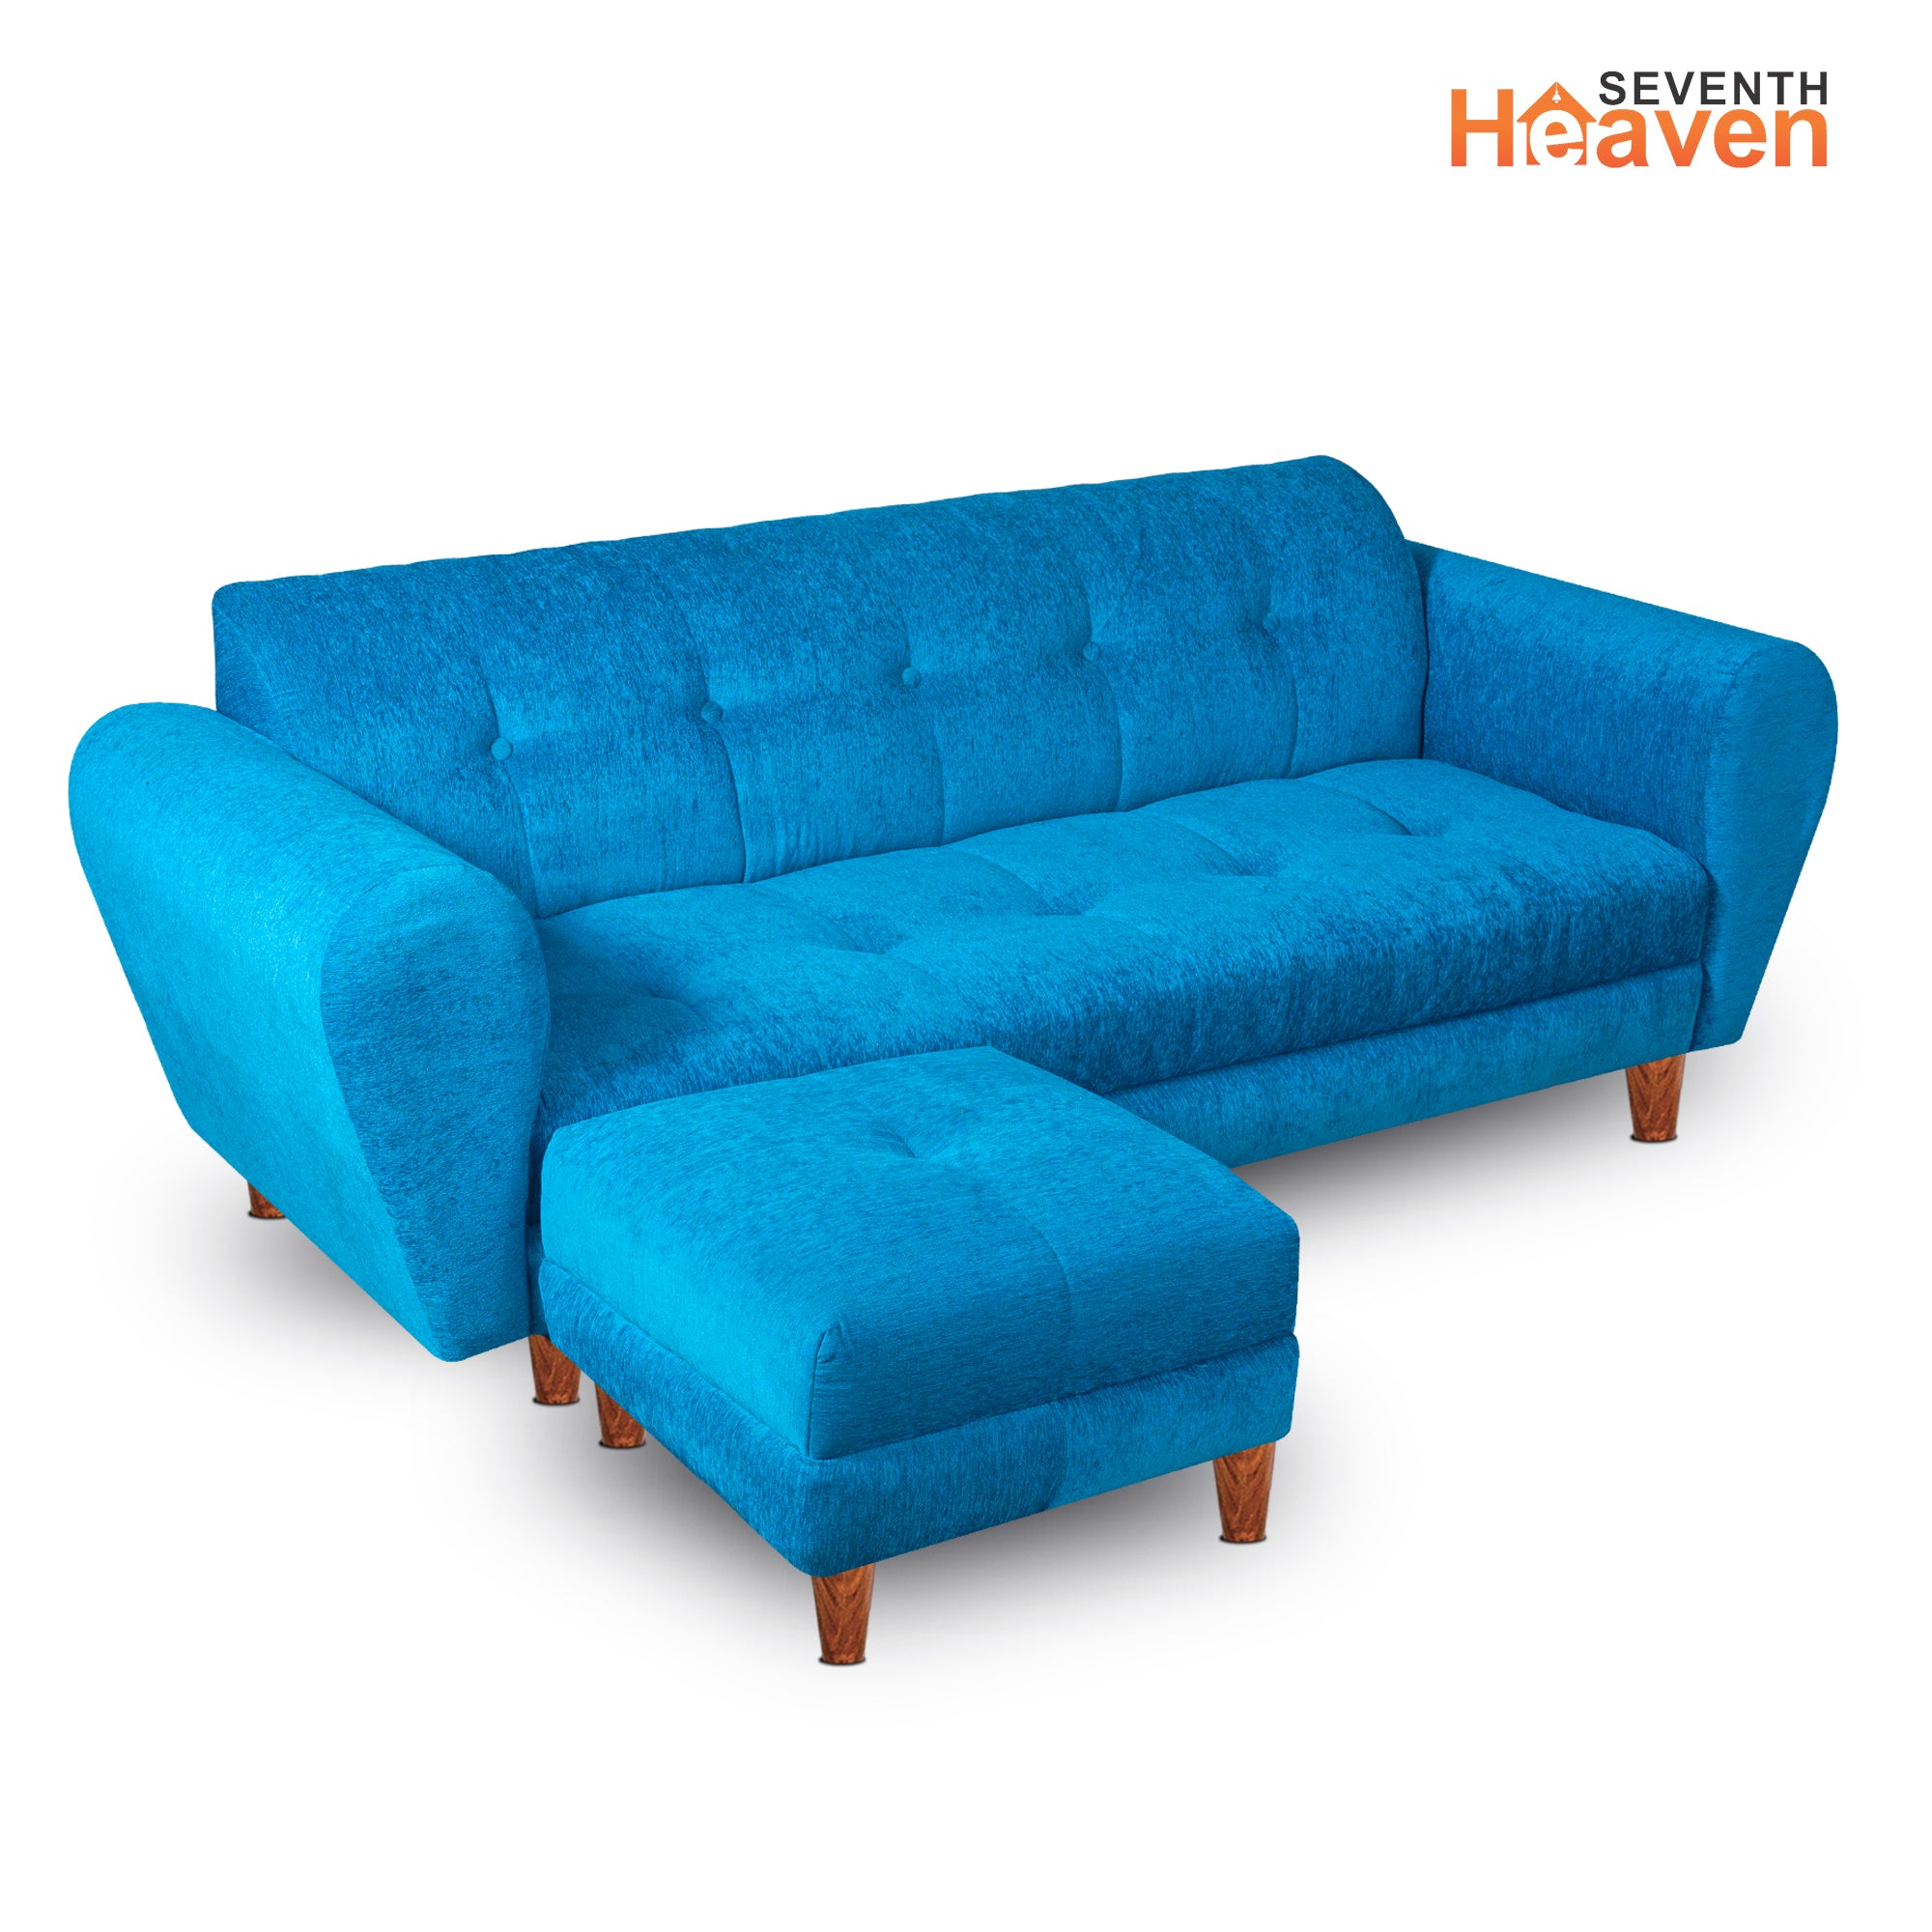 Seventh Heaven Milan 4 Seater Sofa with Ottoman, Chenille Molfino Fabric: 3 Year Warranty Fabric 4 Seater Sofa  (Finish Color - Sky Blue, DIY(Do-It-Yourself))